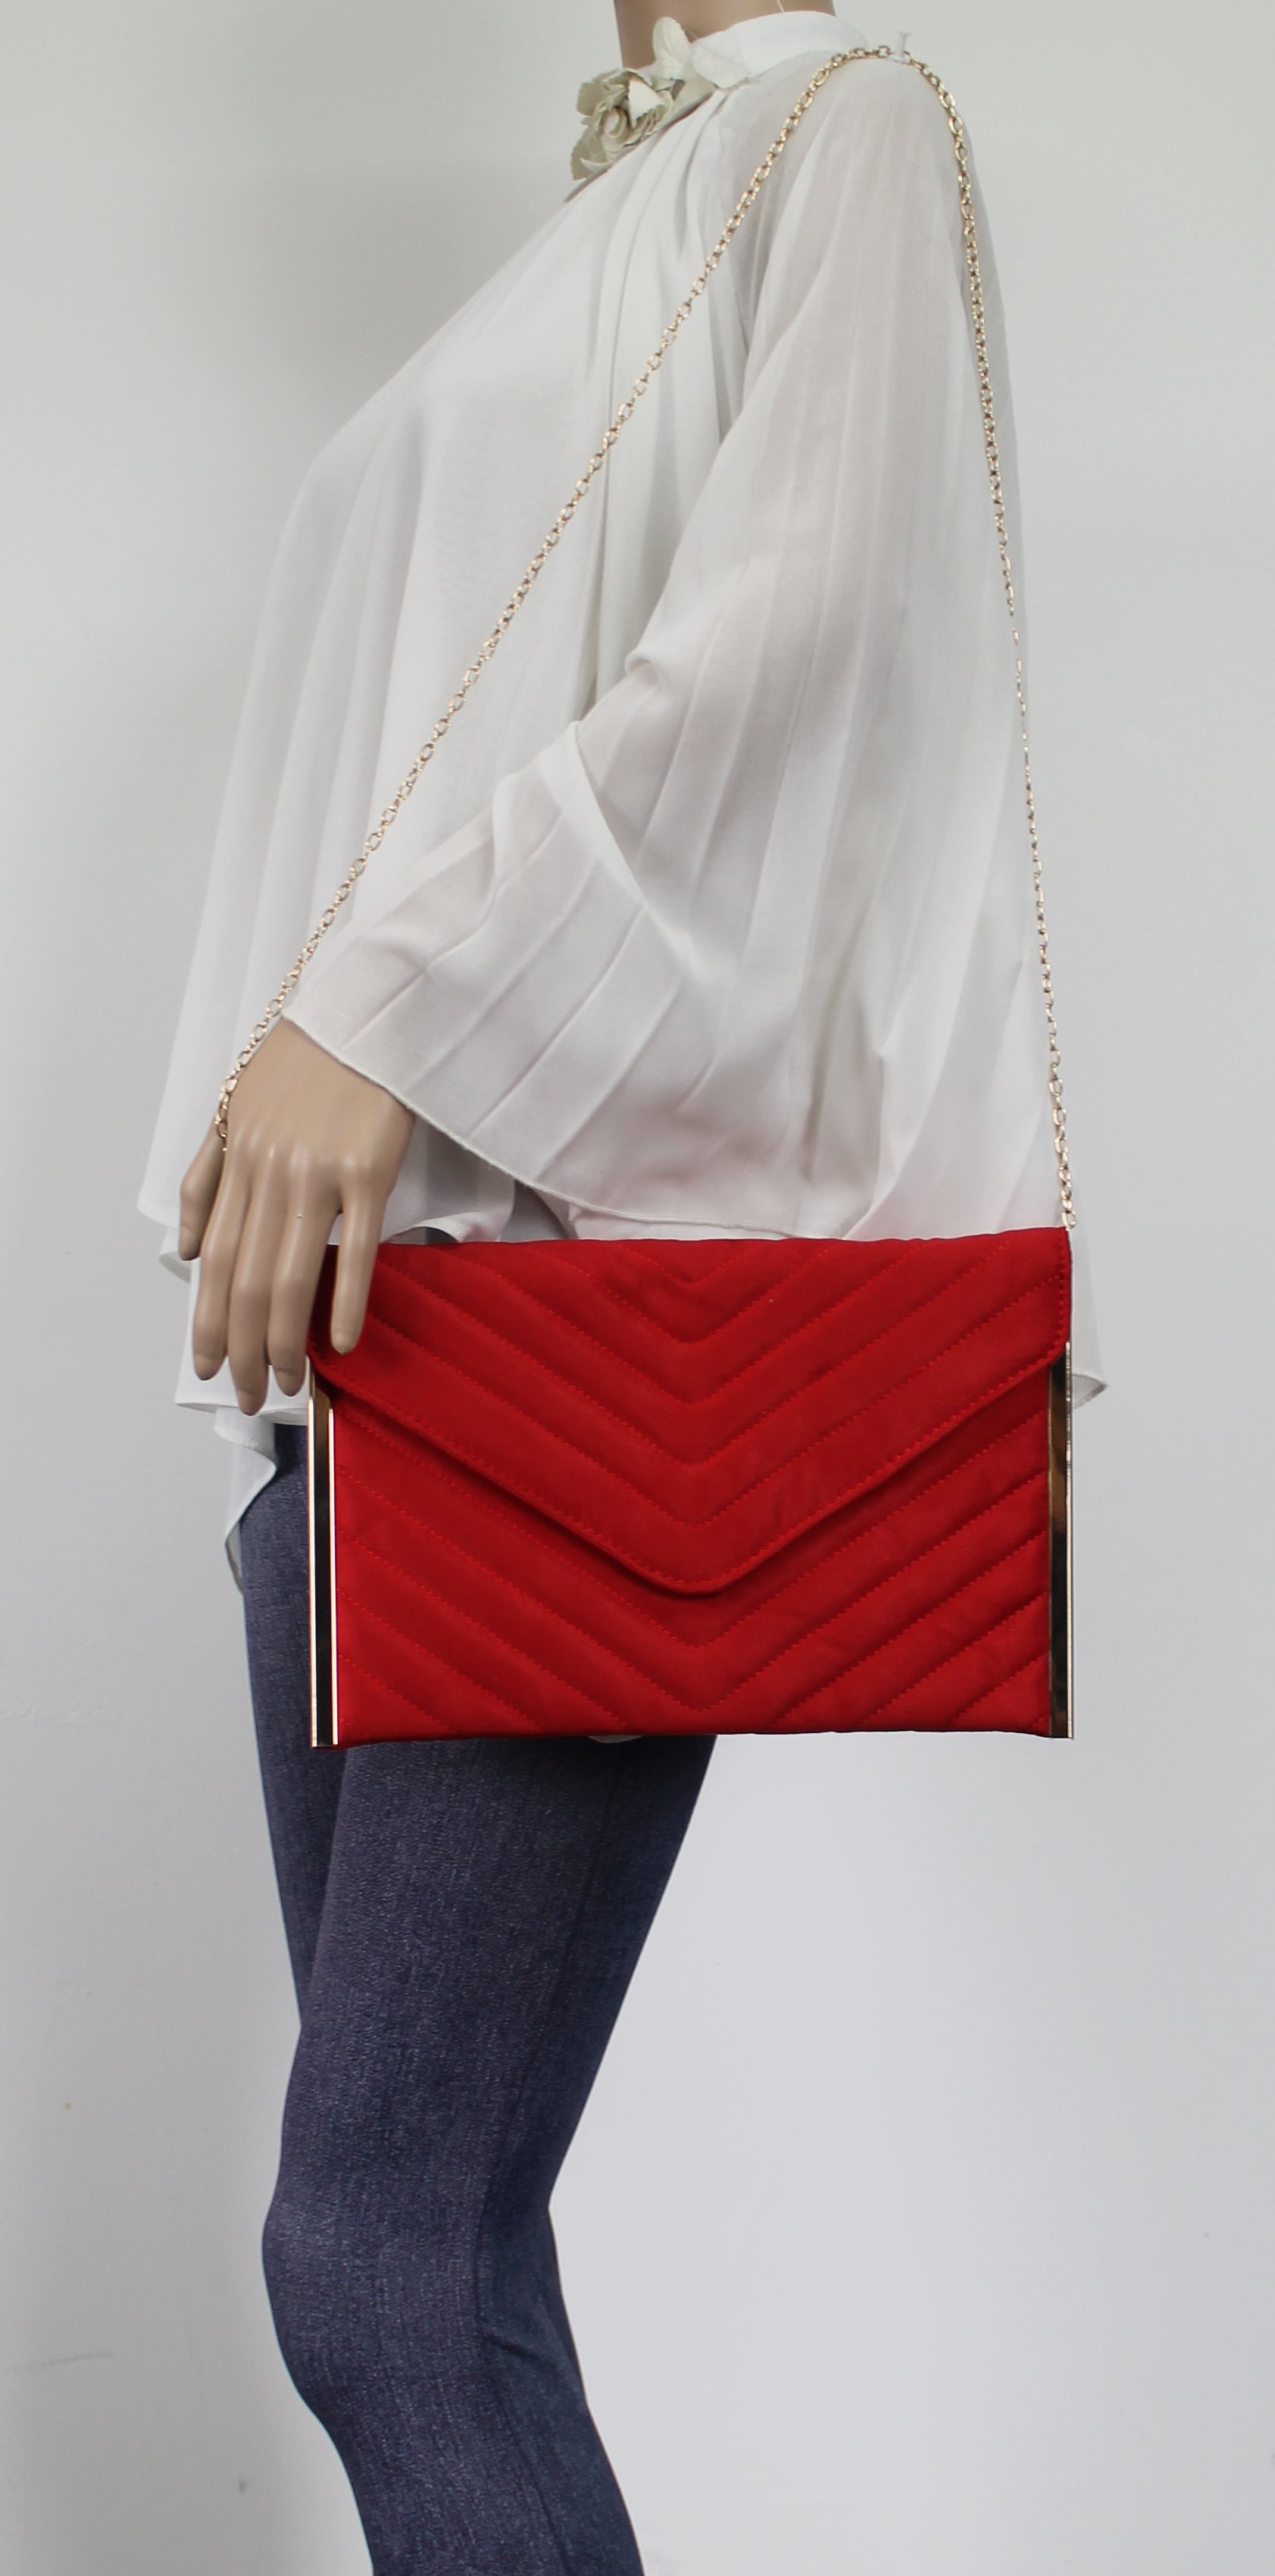 SWANKYSWANS Tessa Clutch Bag Red Cute Cheap Clutch Bag For Weddings School and Work